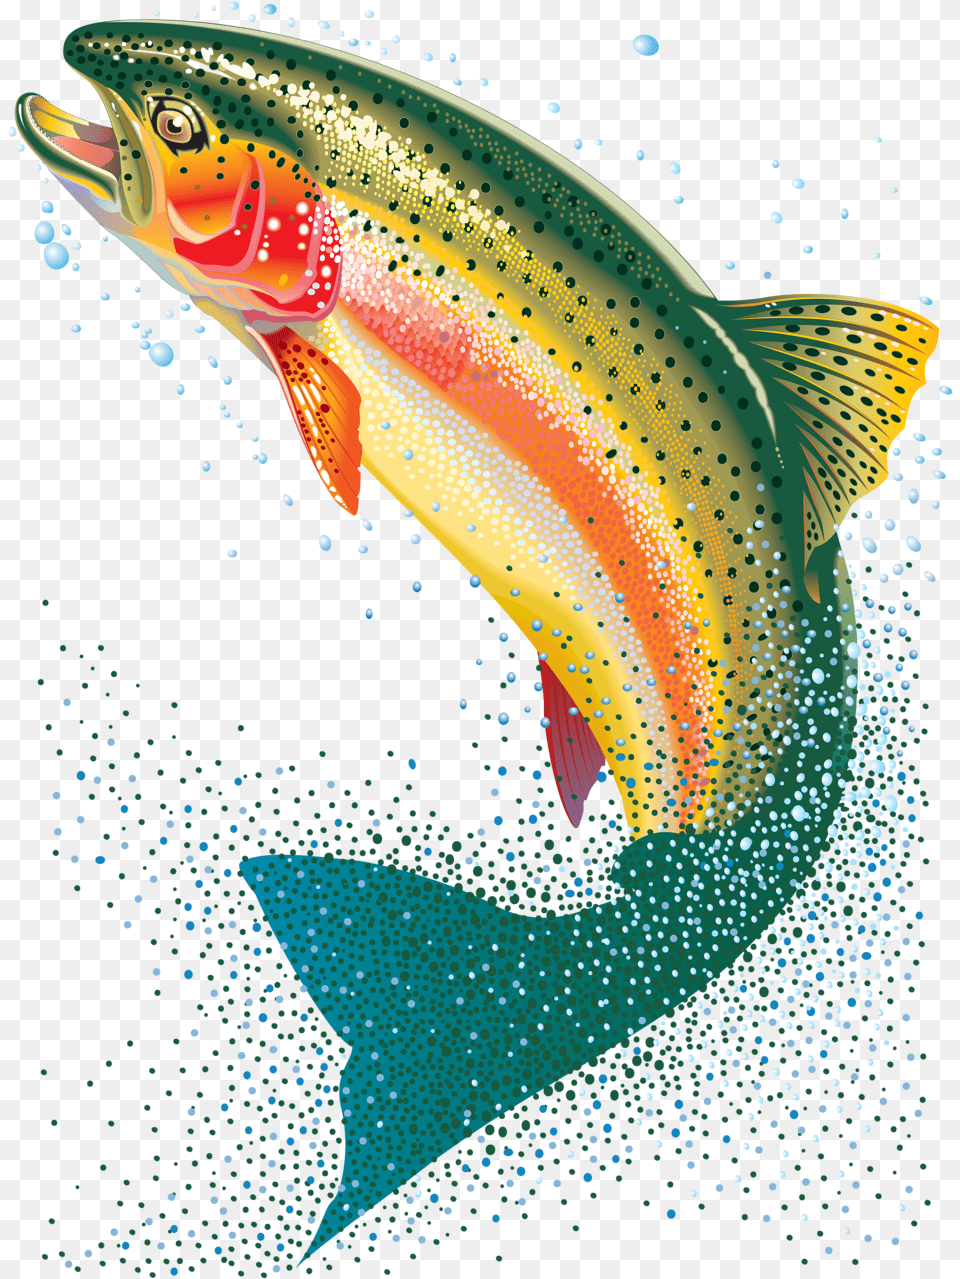 Transparent Background Trout Clipart Download Transparent Background Trout Fish, Animal, Sea Life, Shark Png Image